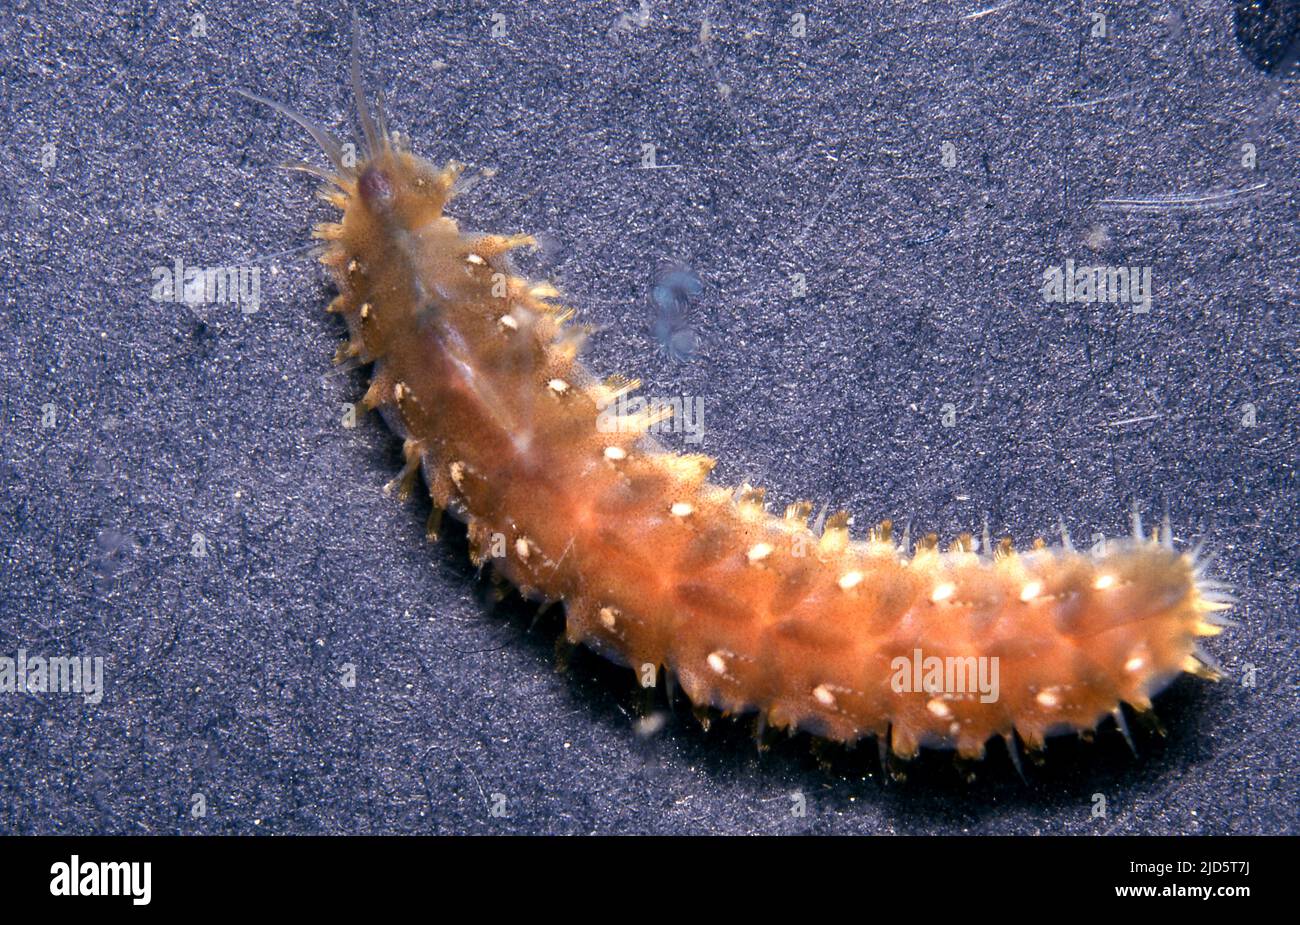 Scale worm from the genus Lepidonotus. Aquariumphoto. Stock Photo